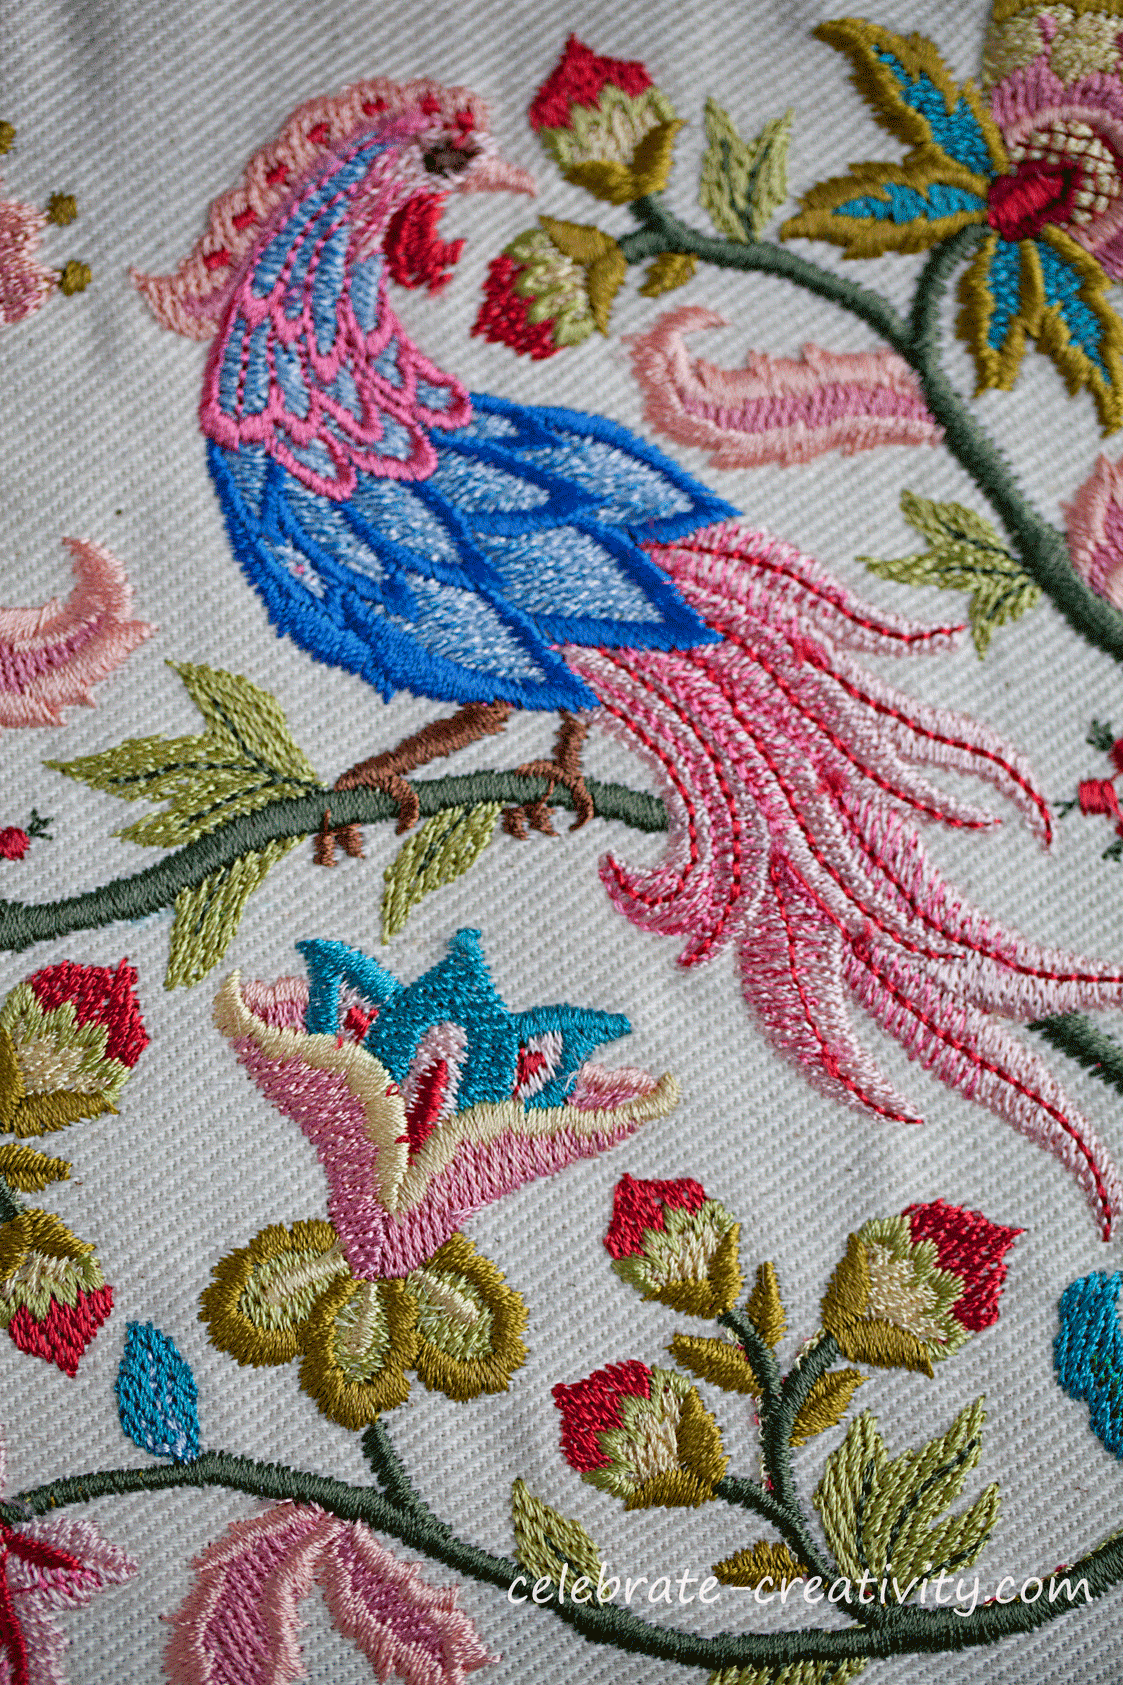 Jacobean Embroidery Patterns Celebrate Creativity